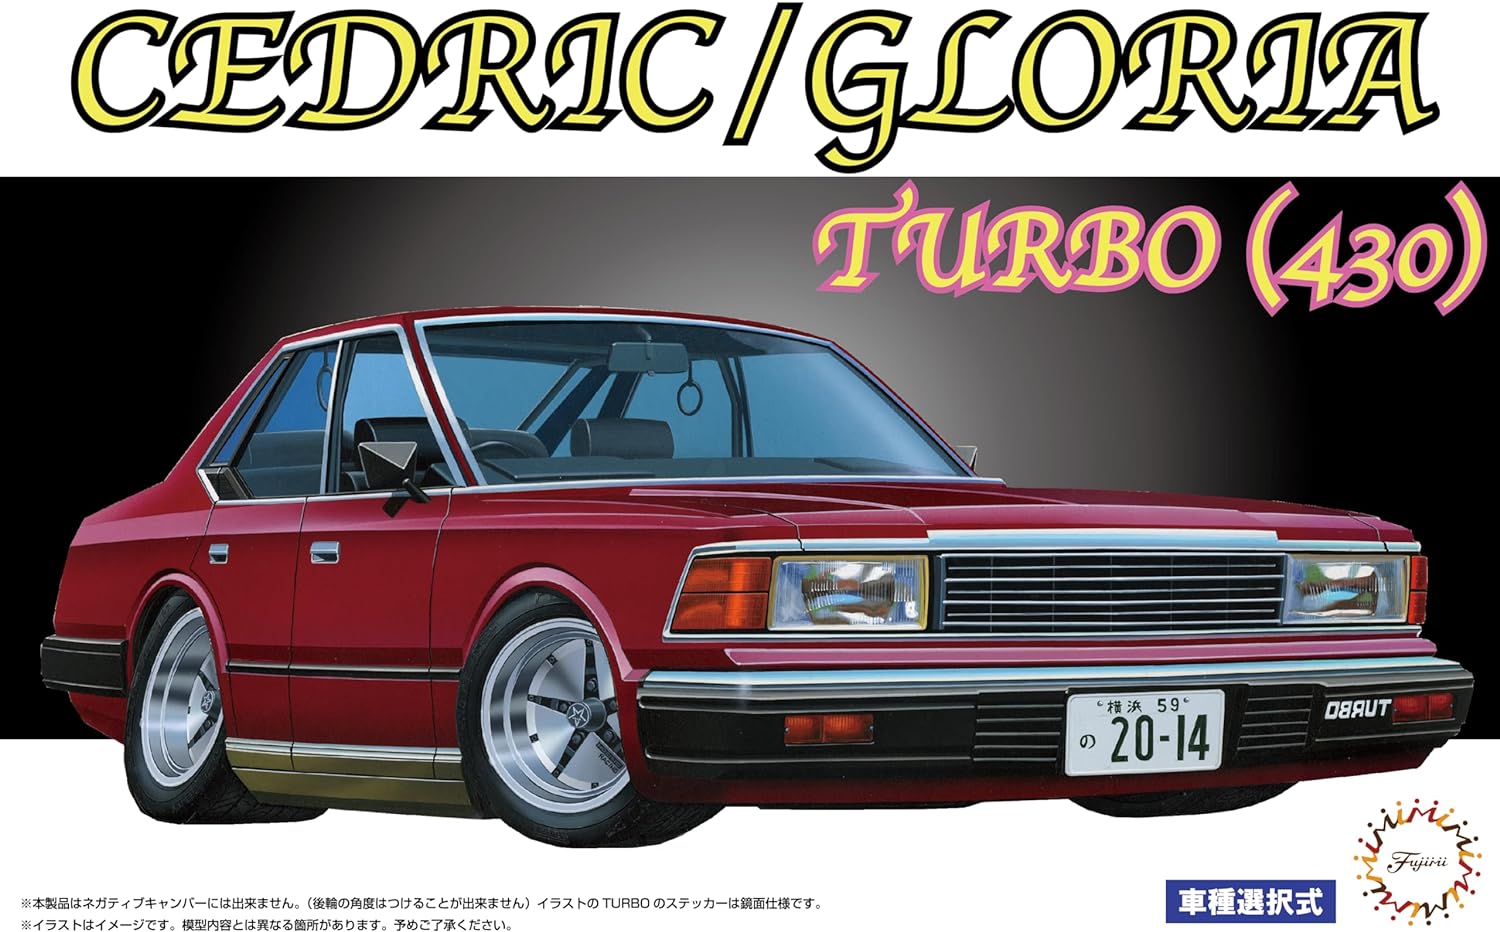 Fujimi Model ID-50 1/24 Inch Up Series No.50 Nissan Cedric/Gloria Turbo (430) - BanzaiHobby